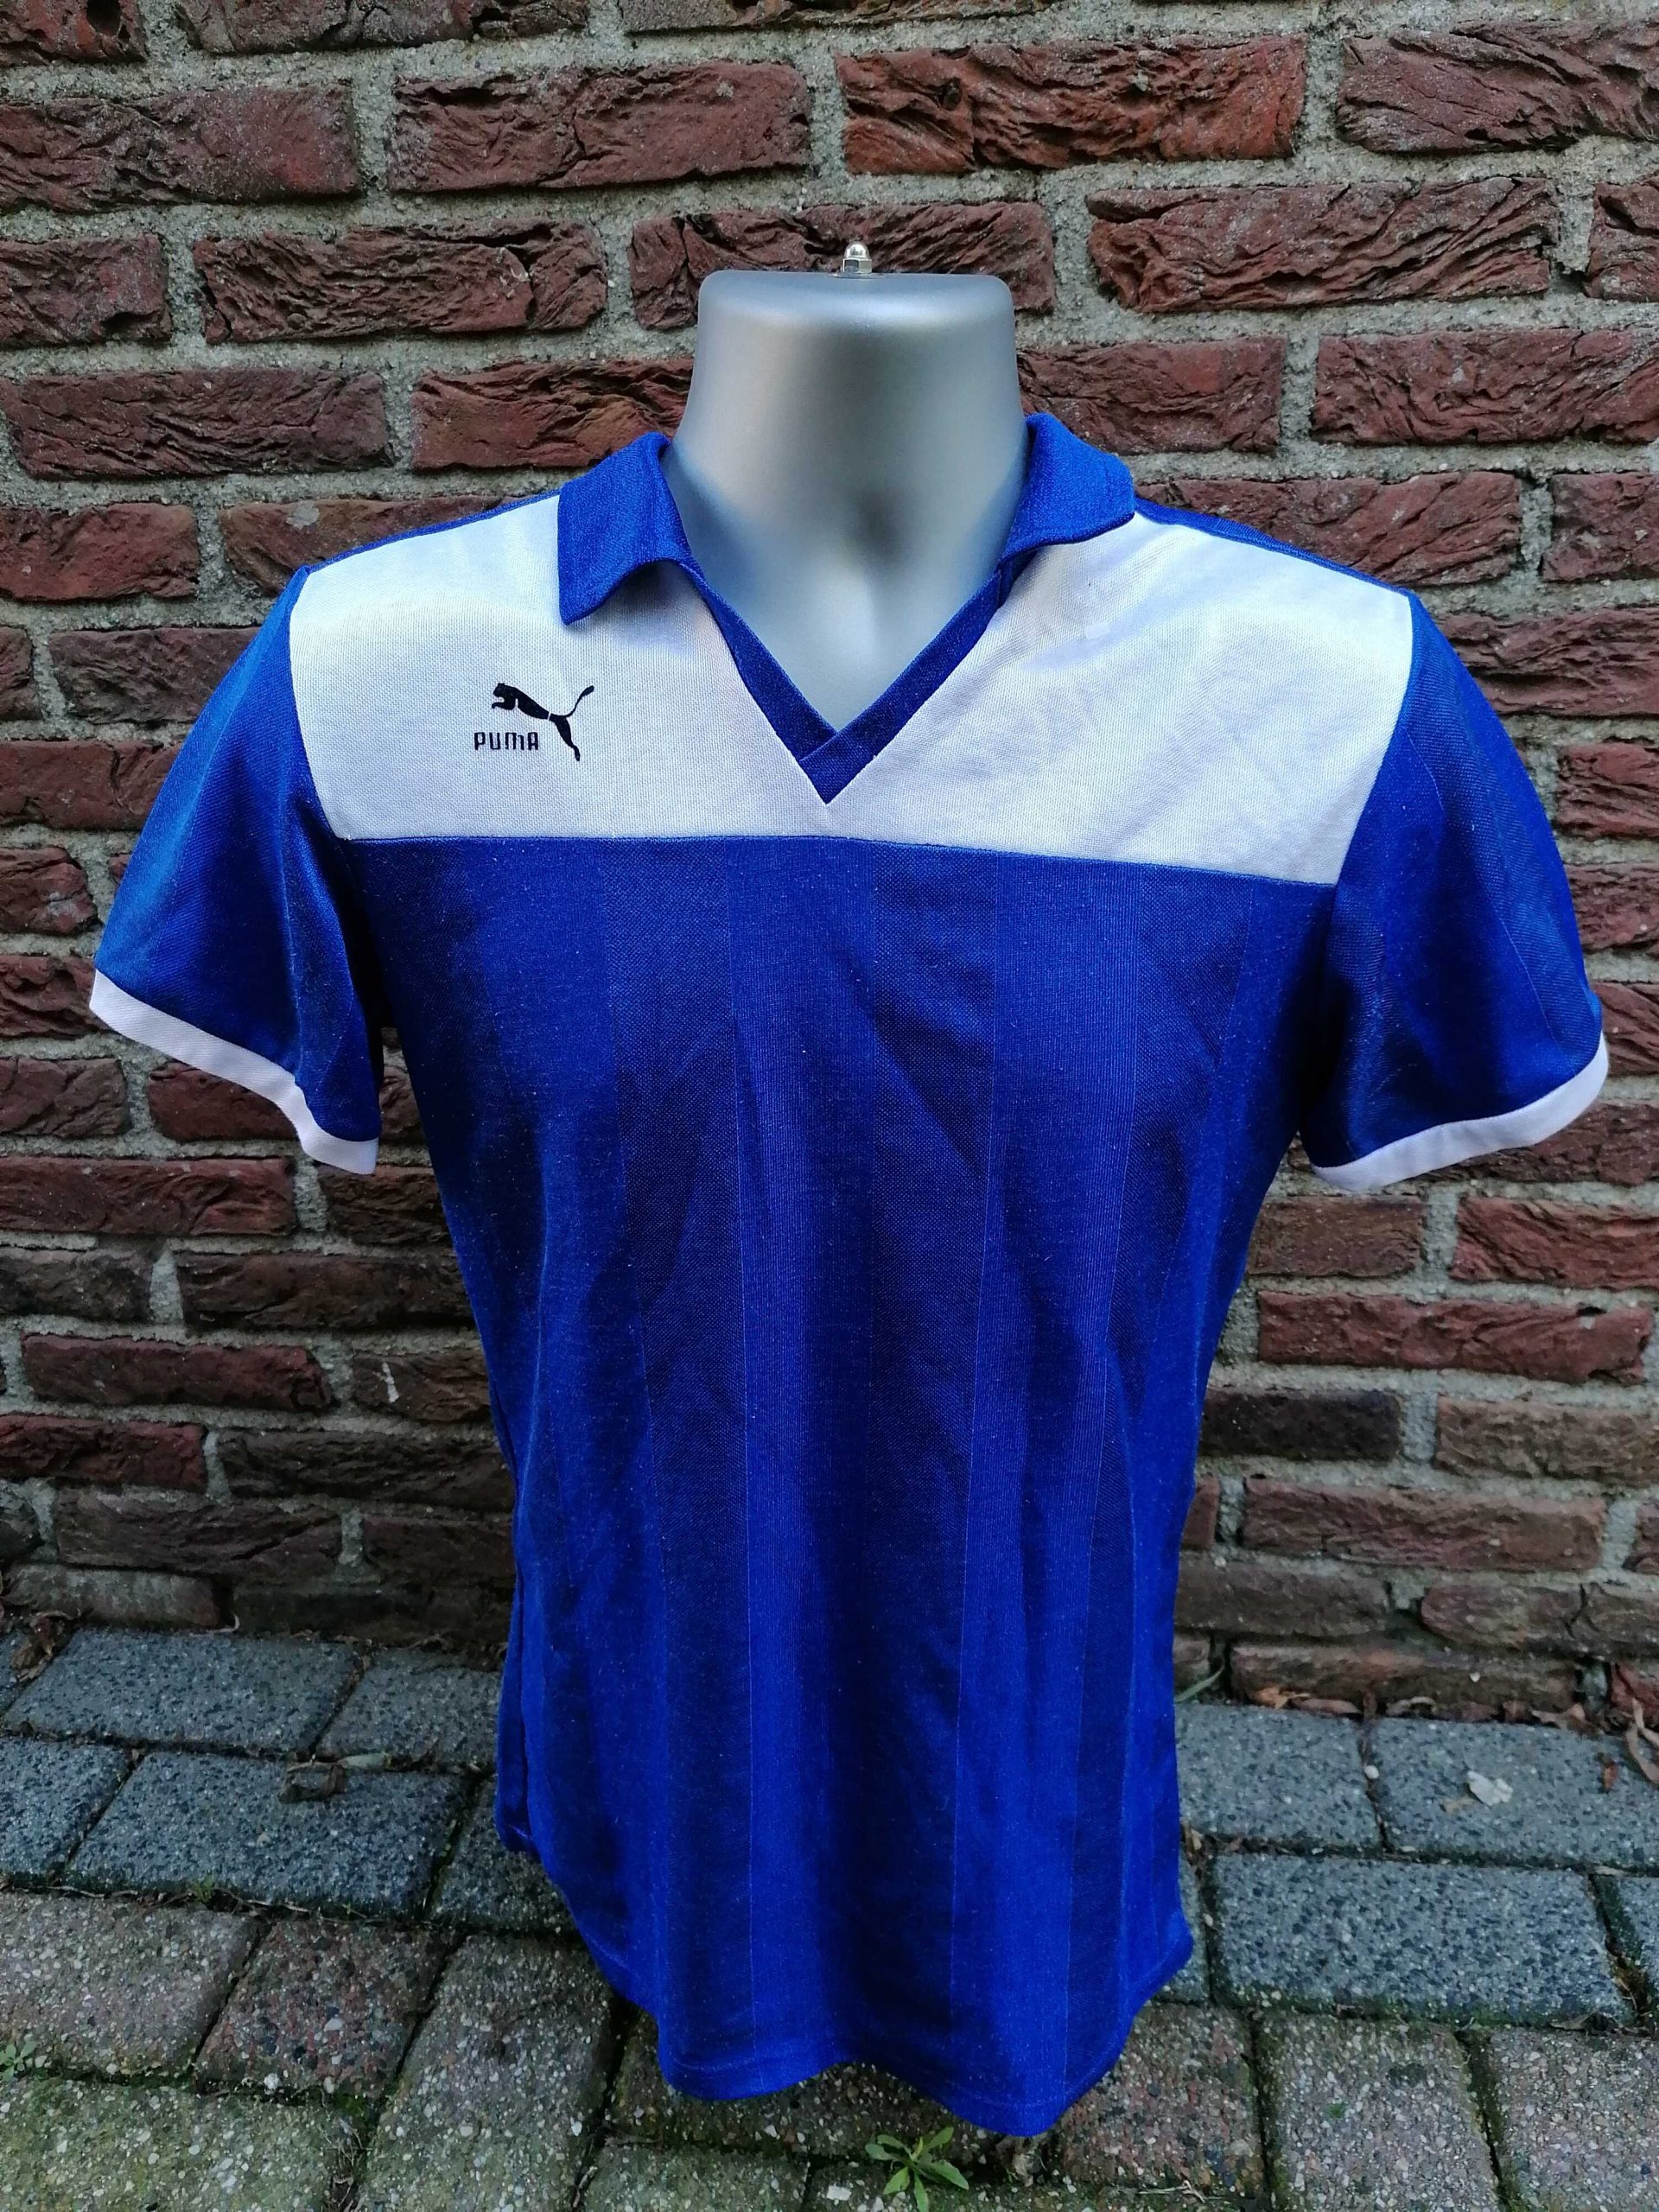 Vintage Puma 1980ies blue shirt football top size M west Germany